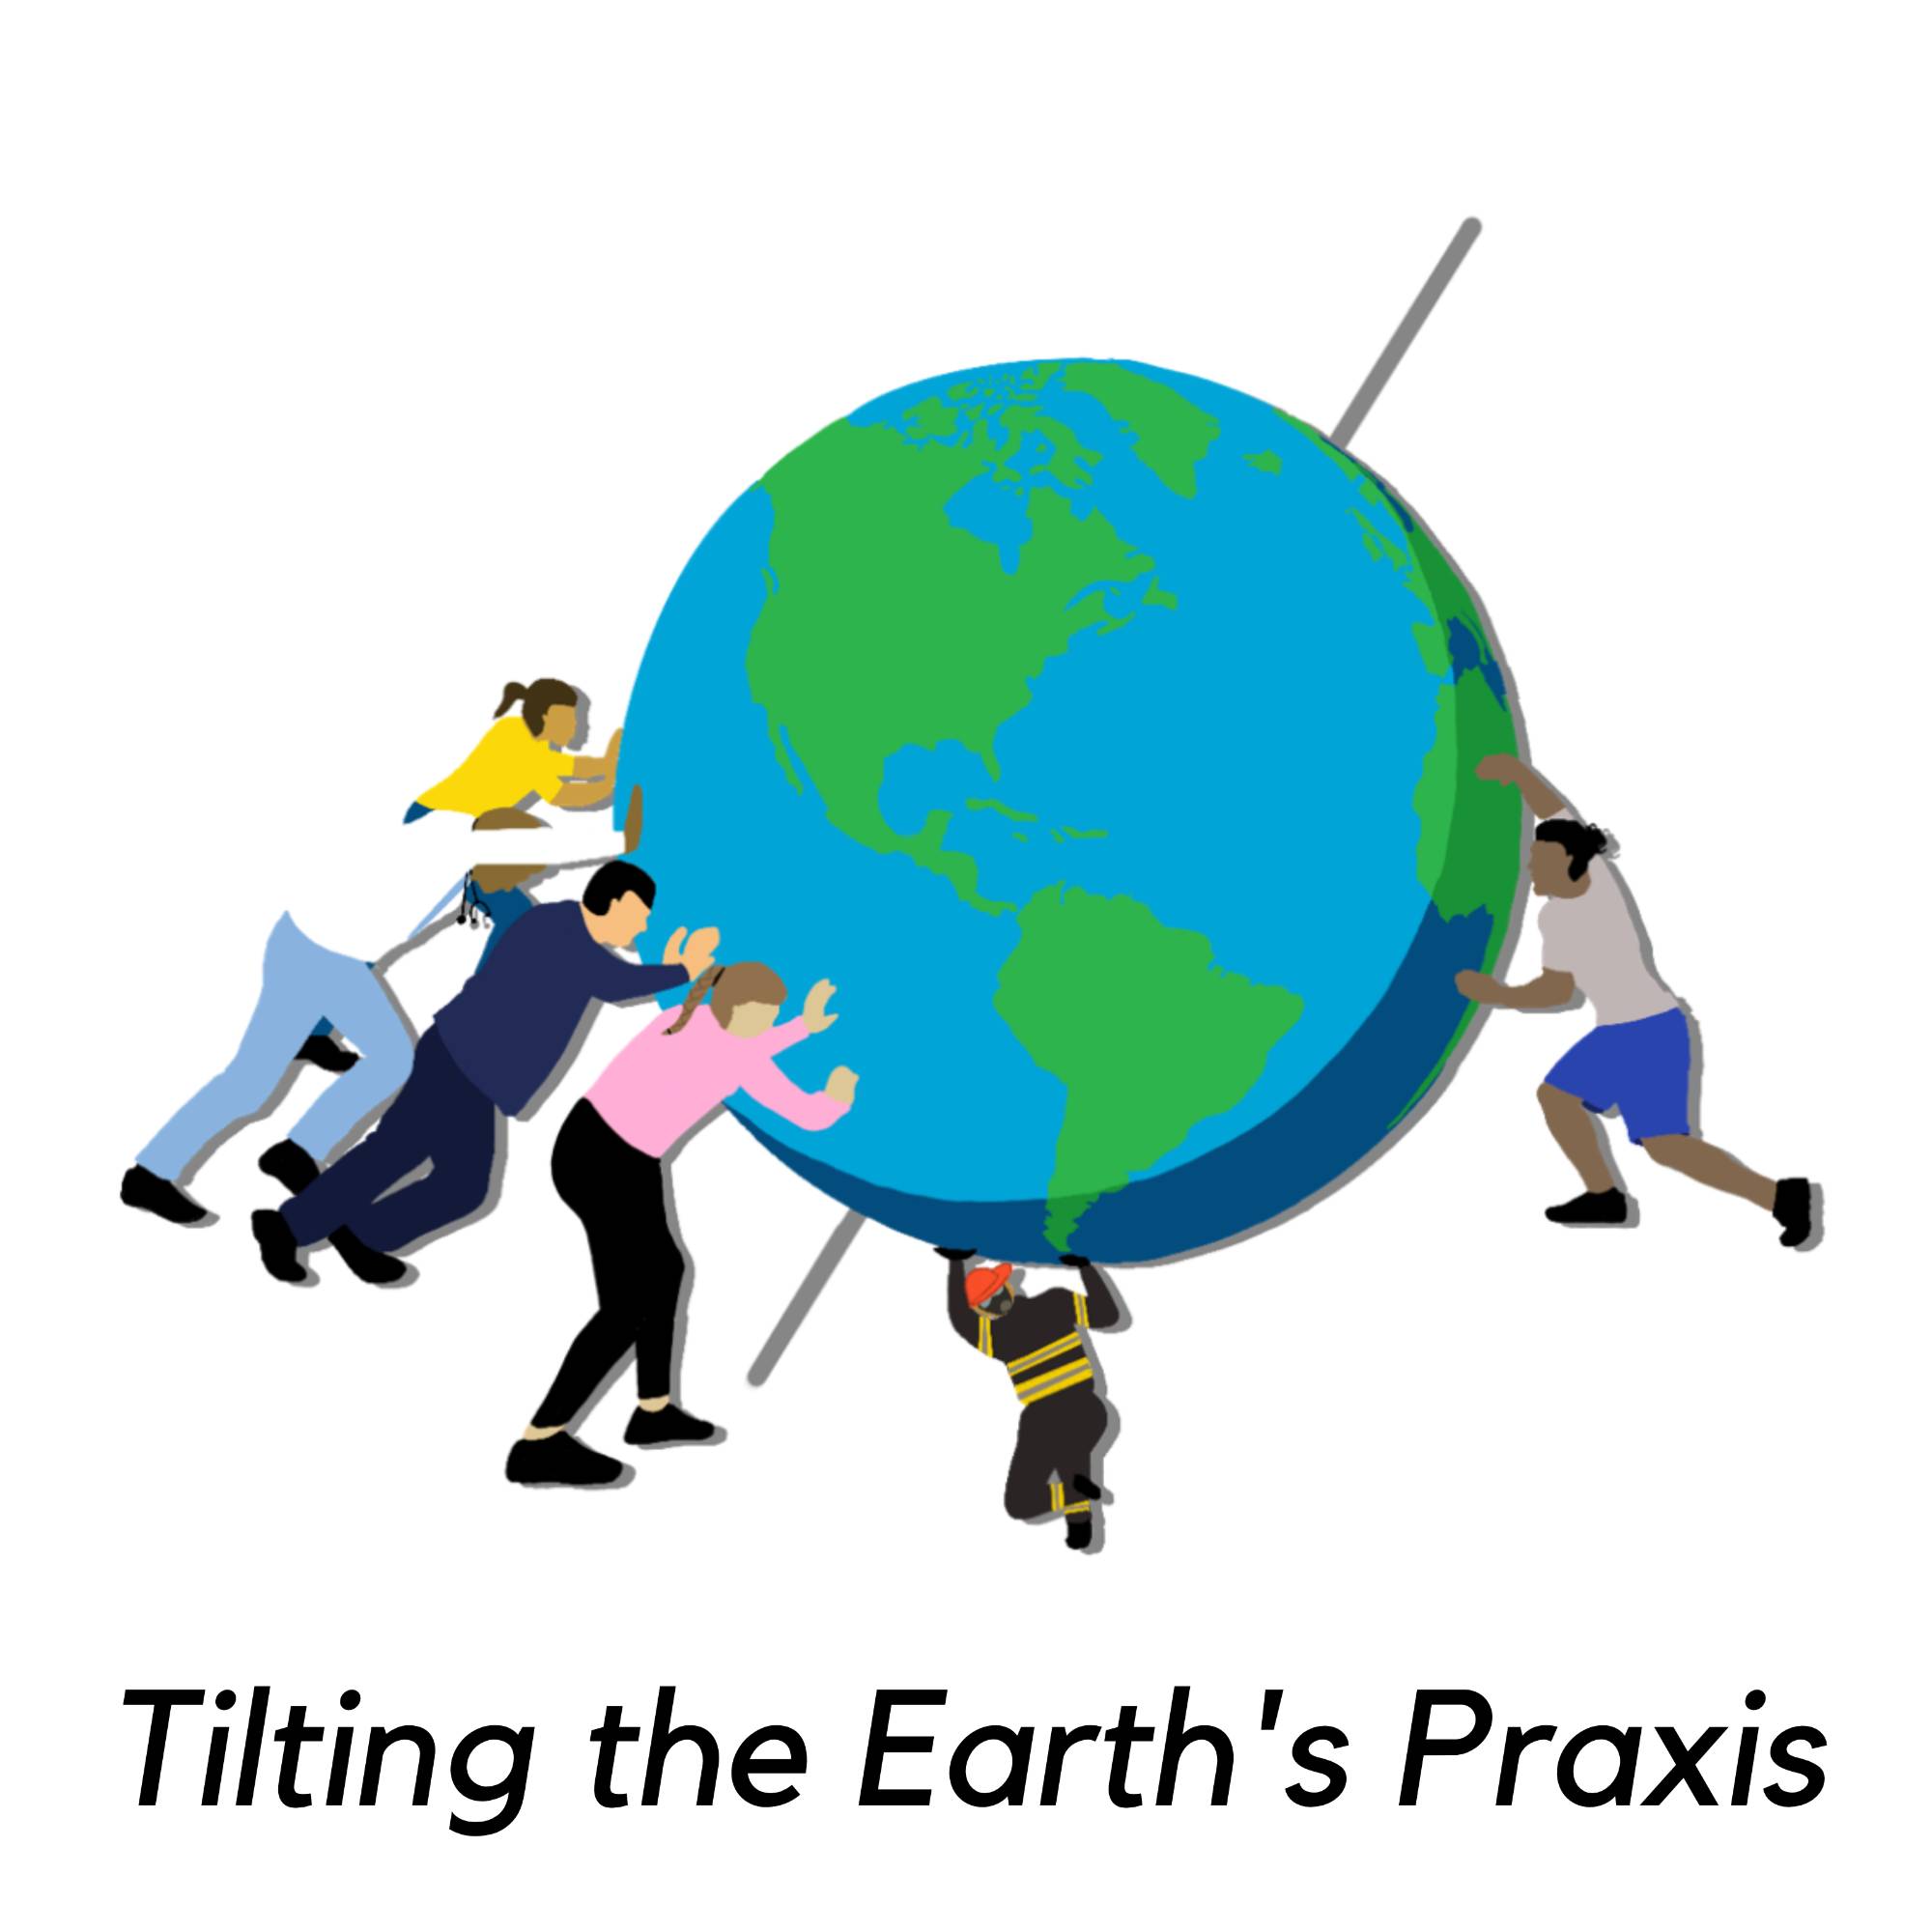 Tilting the Earth's Praxis